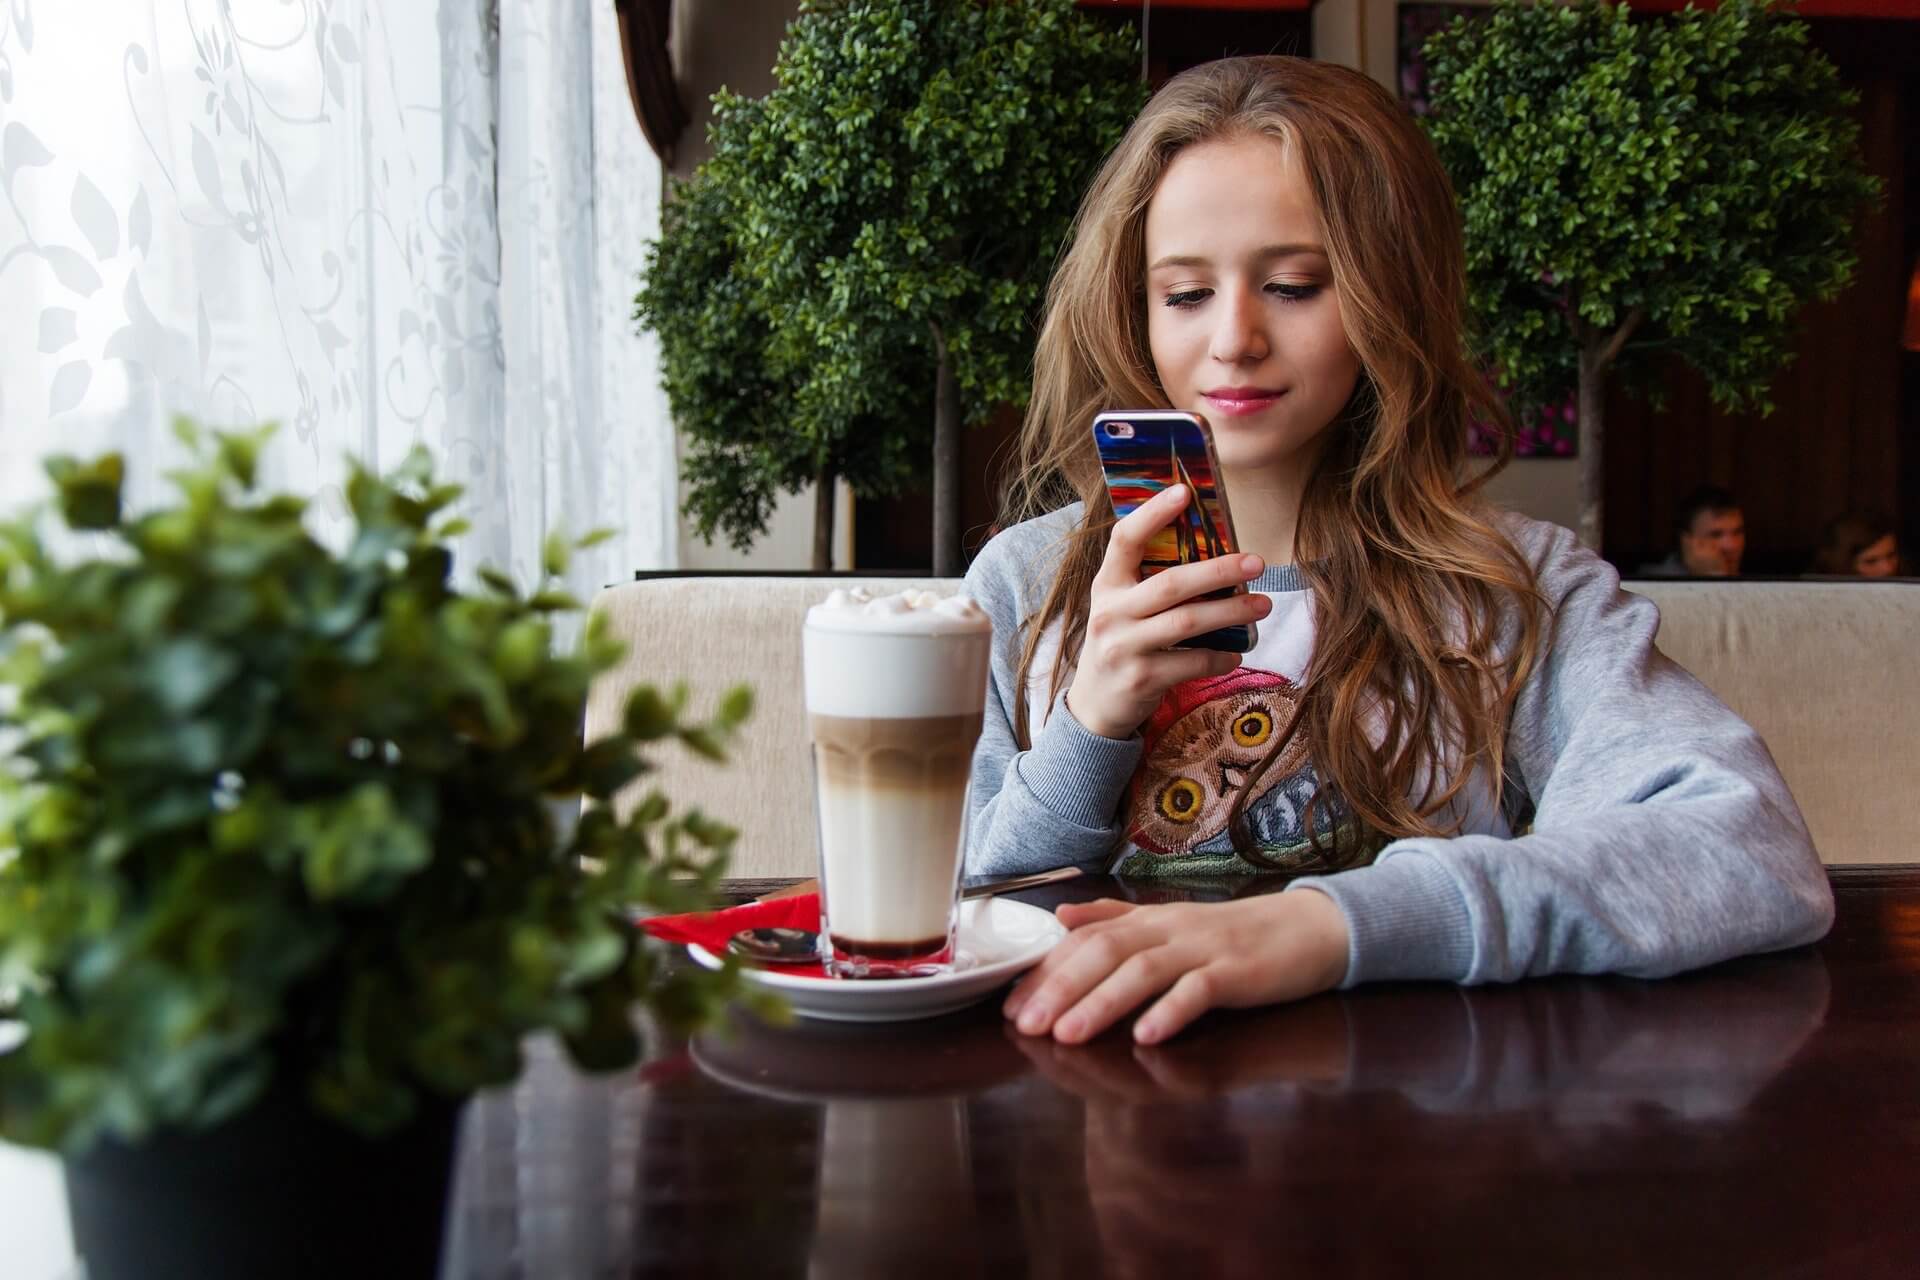 A teenage girl using her smartphone.